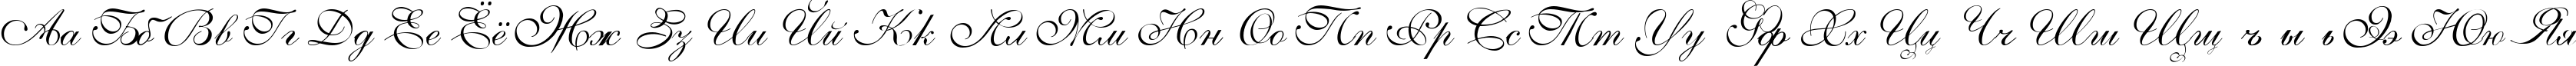 Пример написания русского алфавита шрифтом Allegretto Script Two